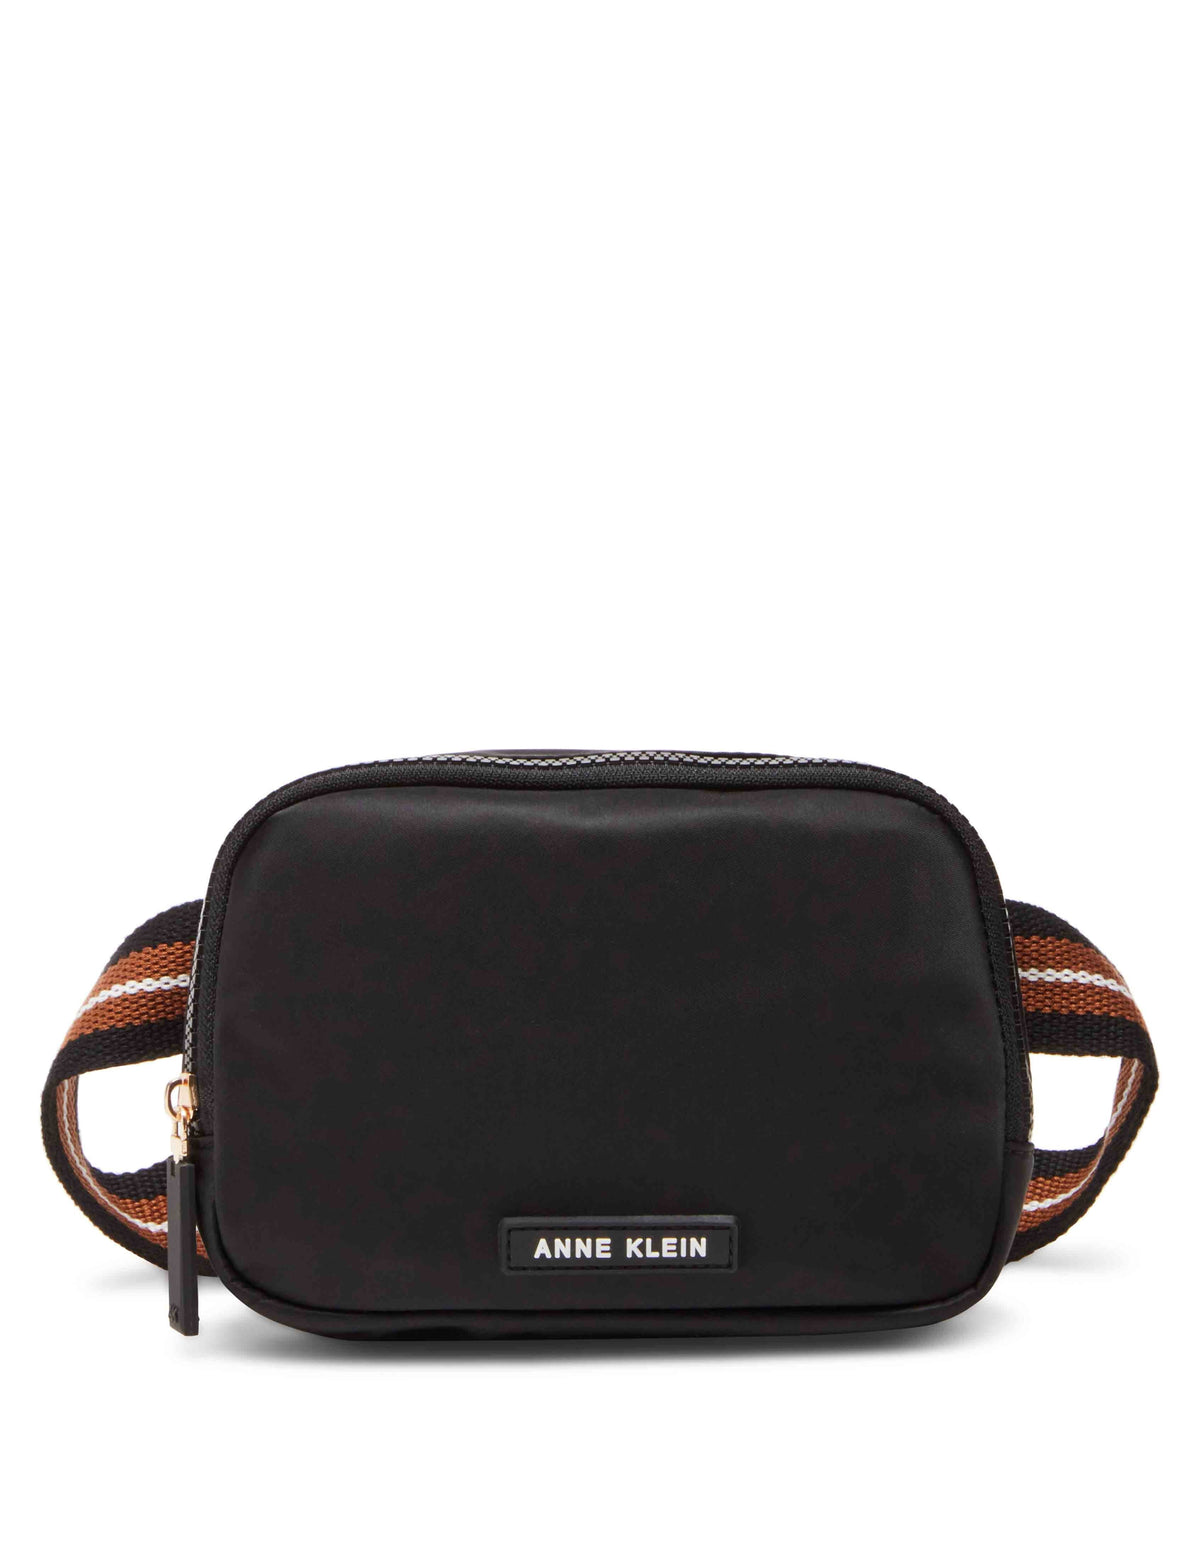 Anne Klein Black Nylon Belt Bag With Web Strap